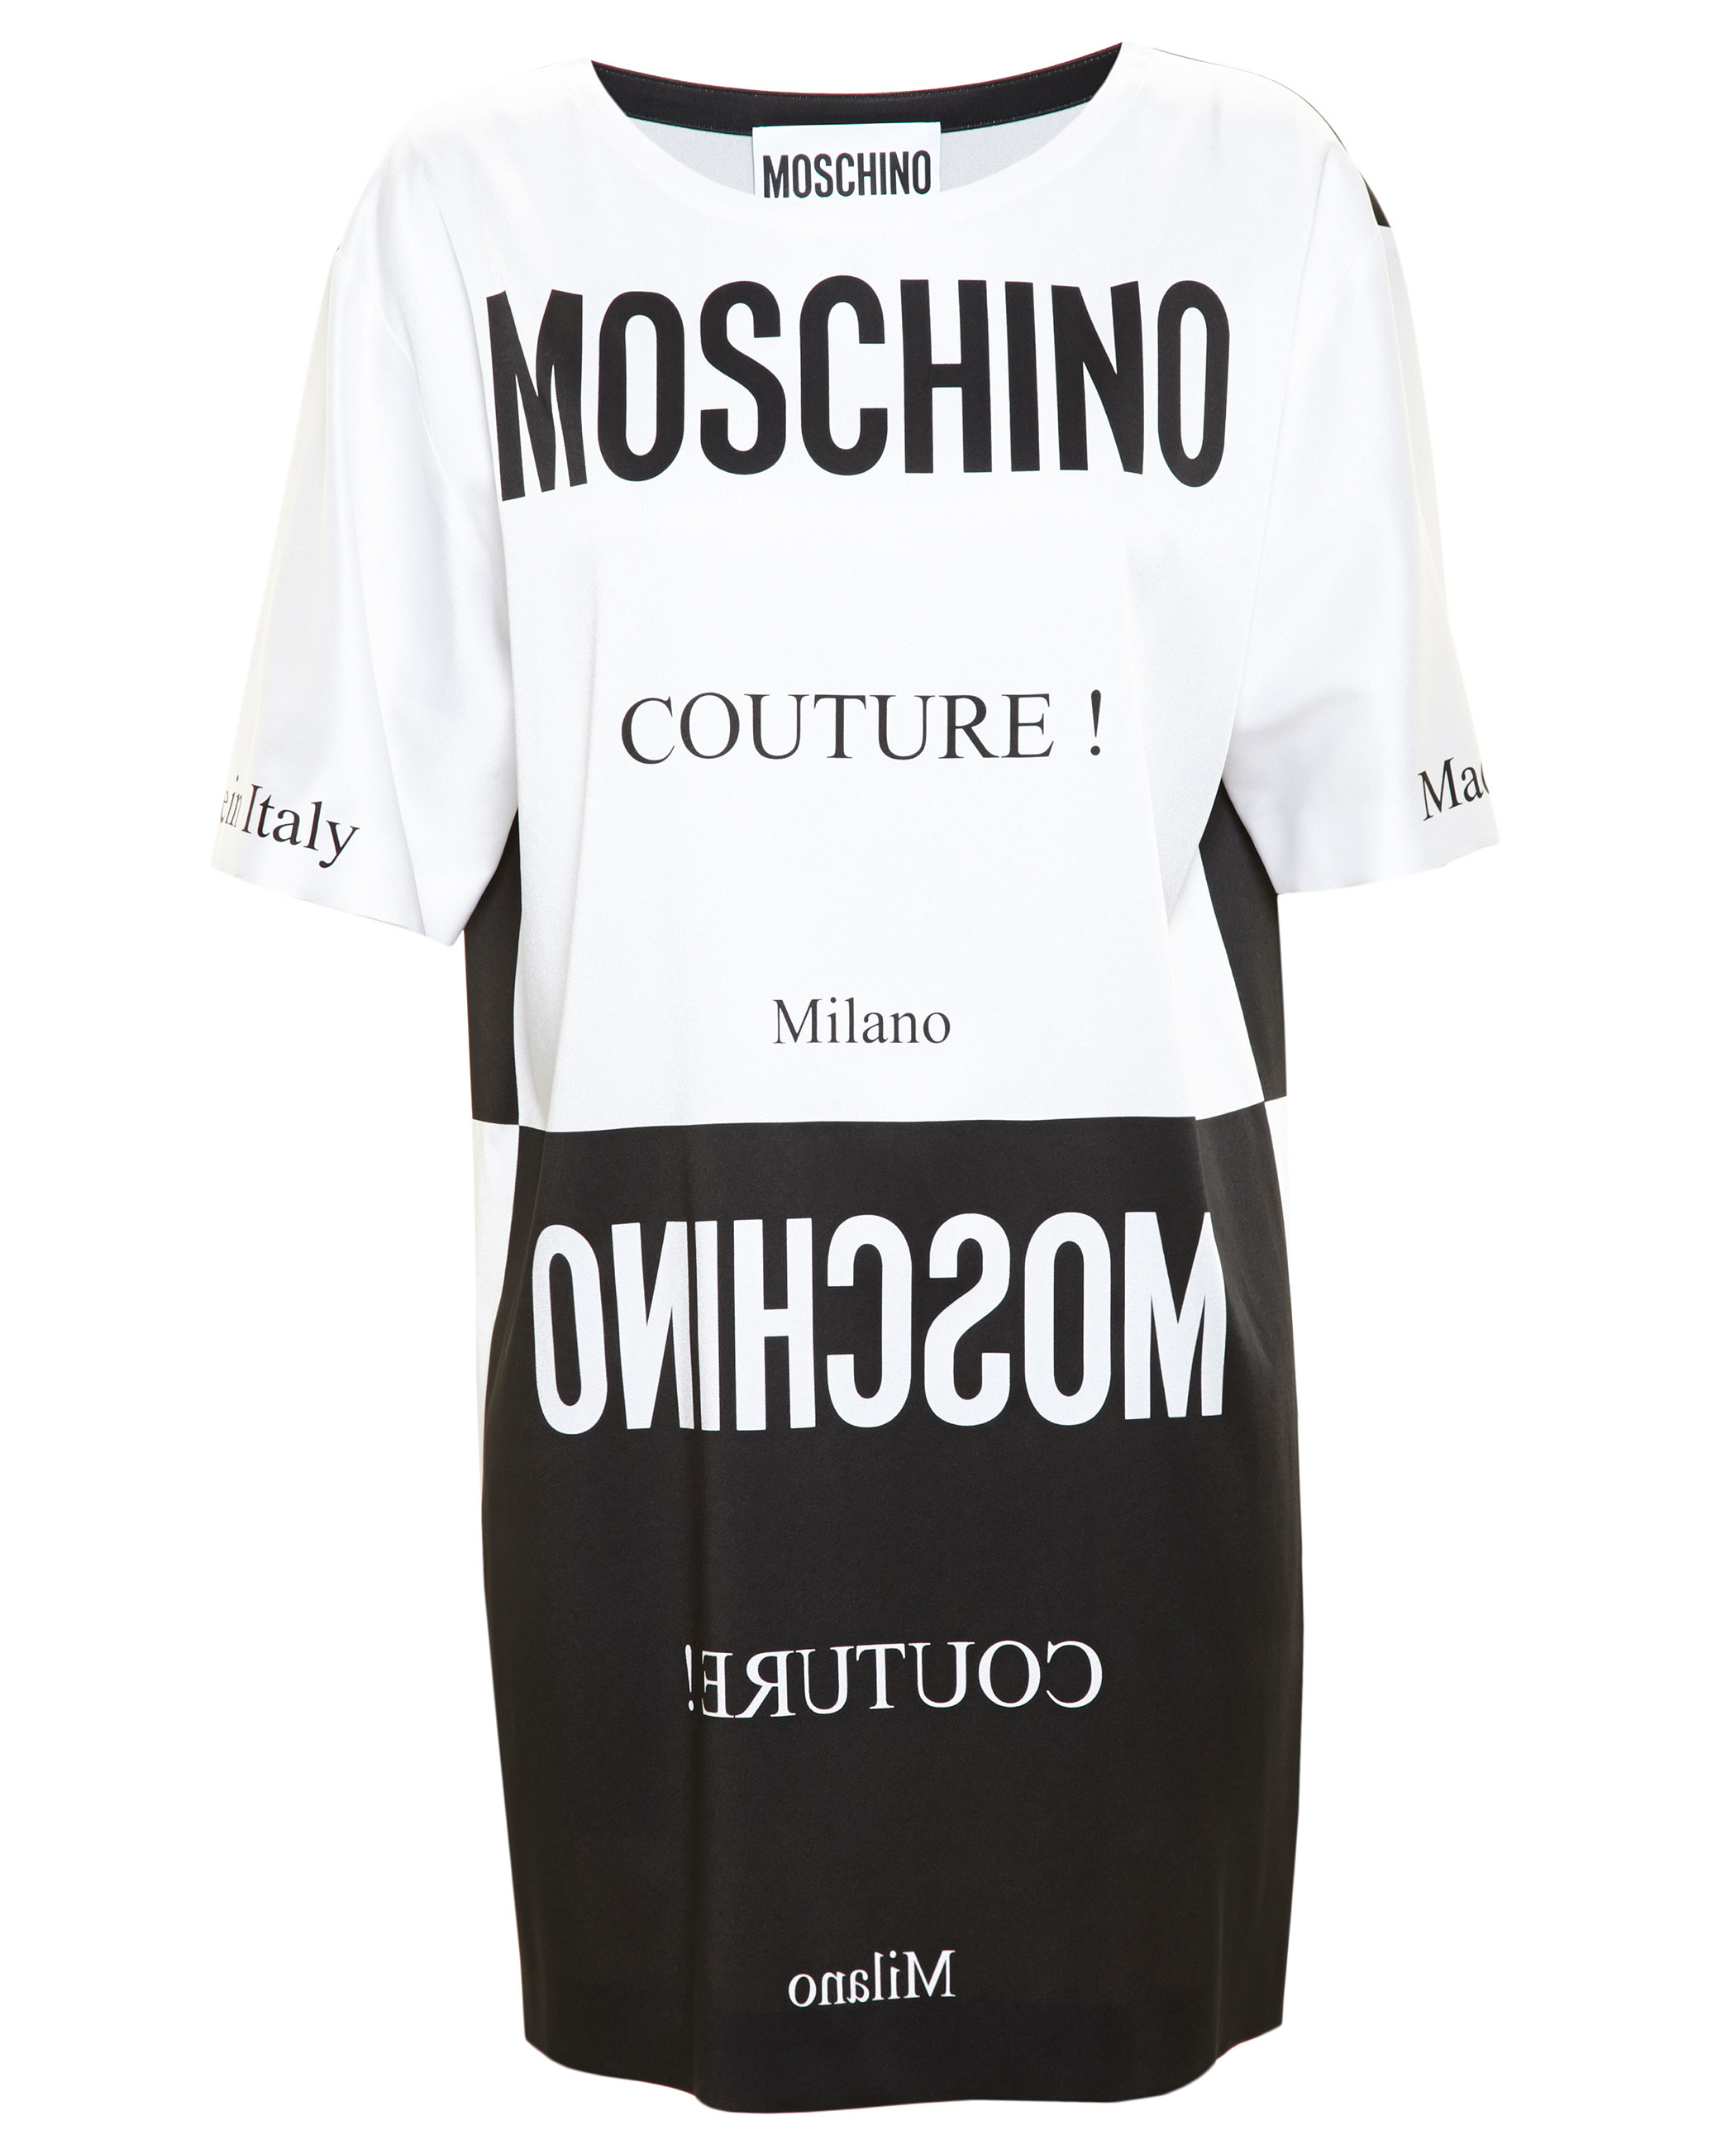 moschino top dress off 52% - www 